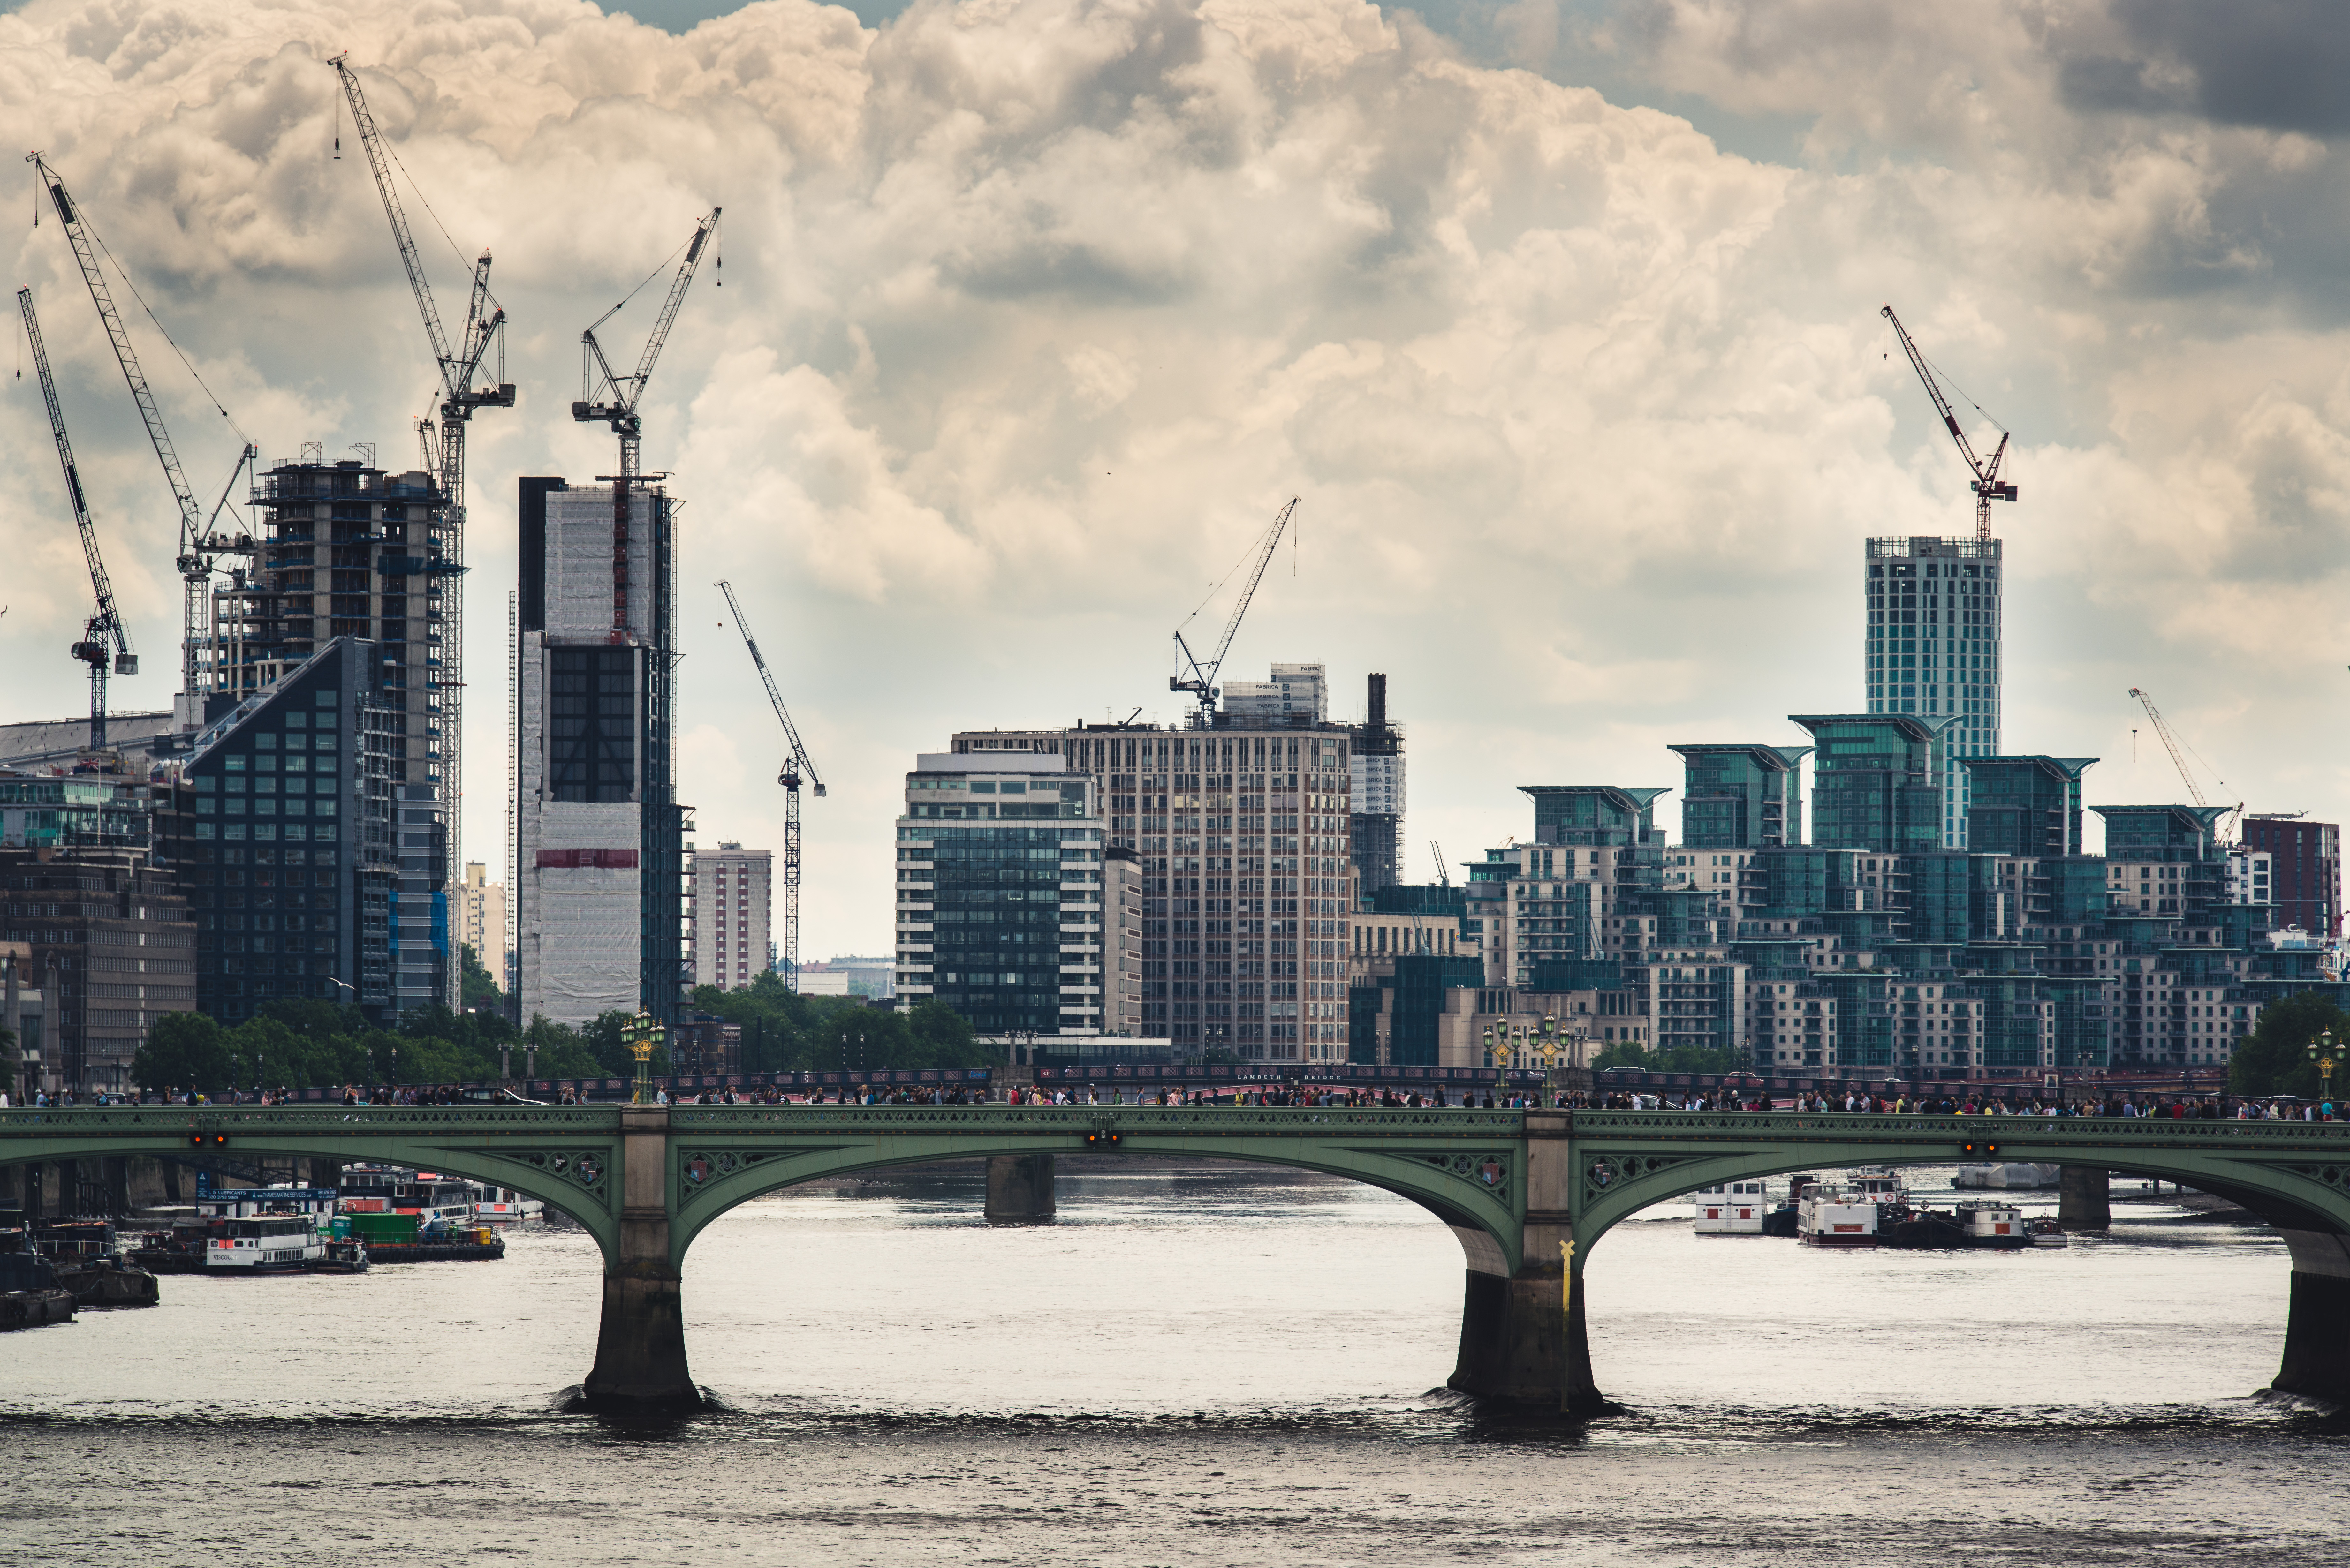 Iconic bridge in London